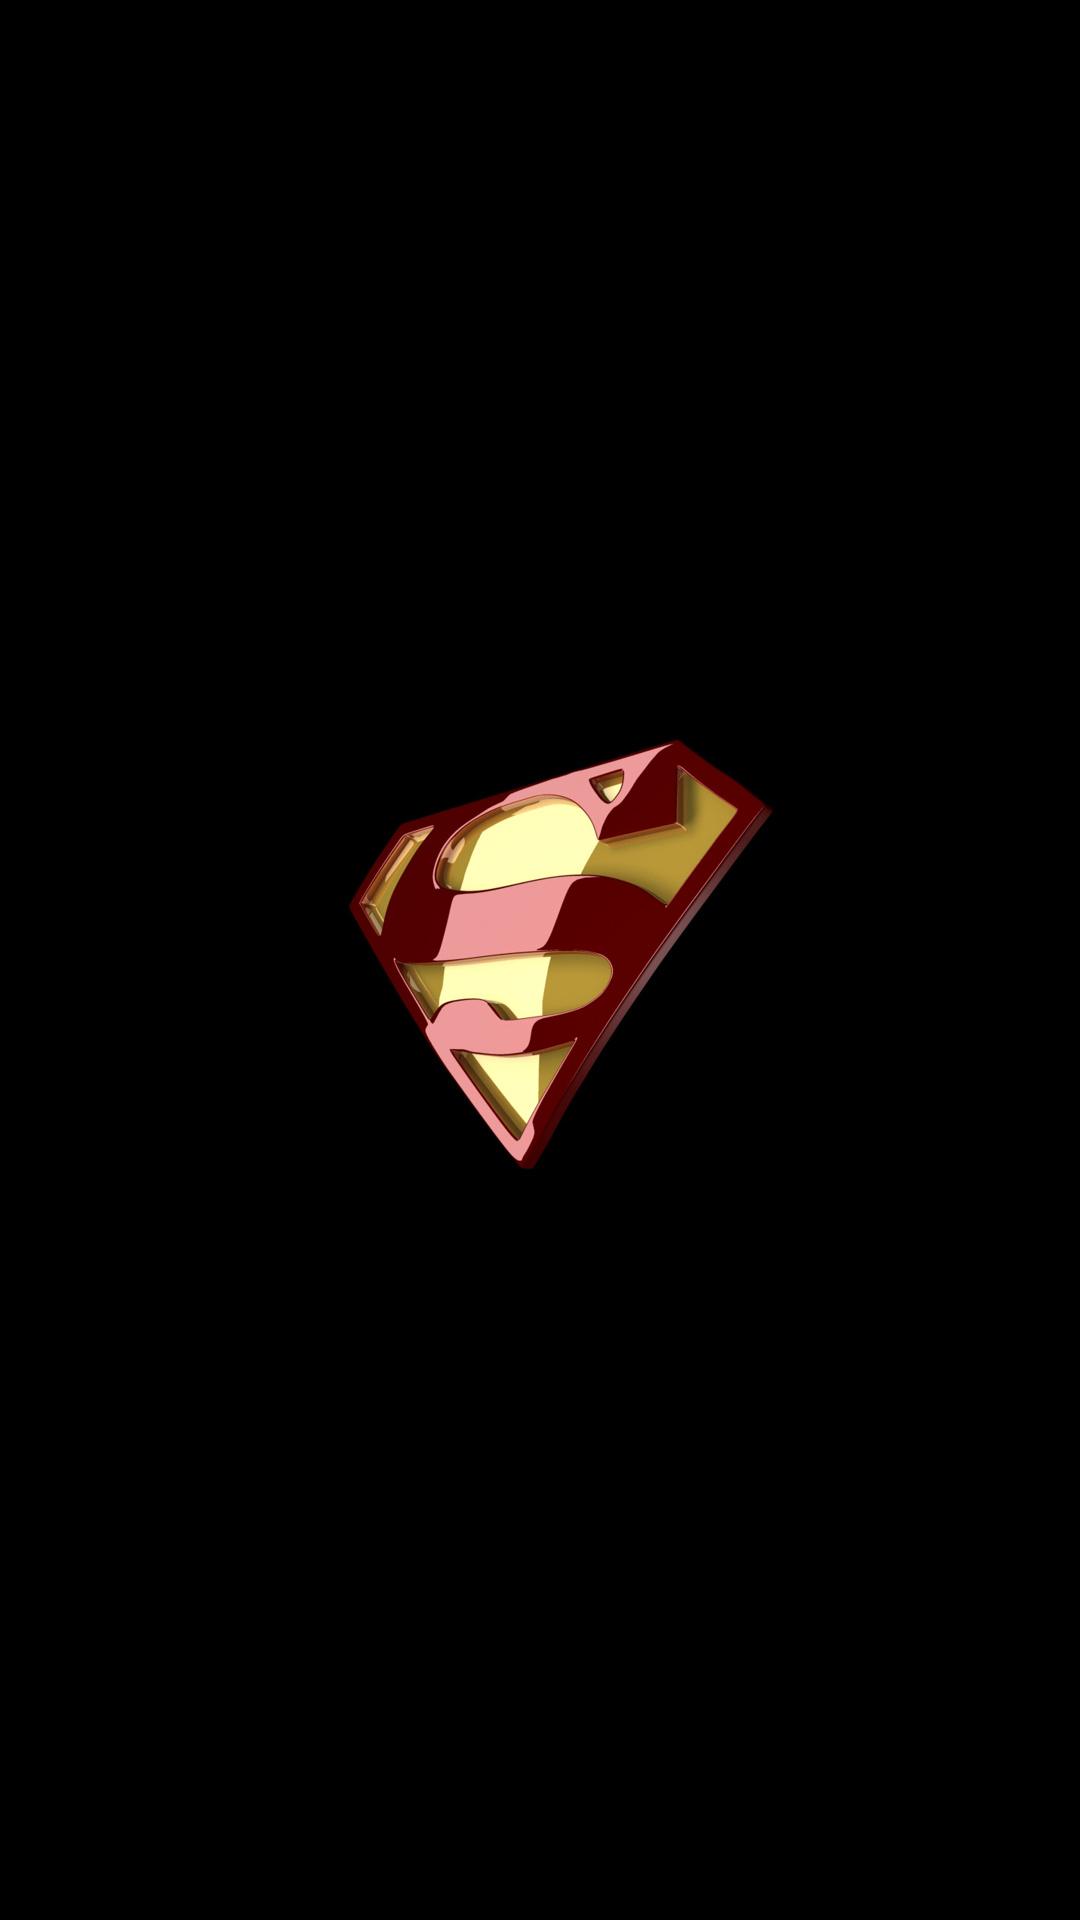 17355 superman logo iphone wallpapers hd